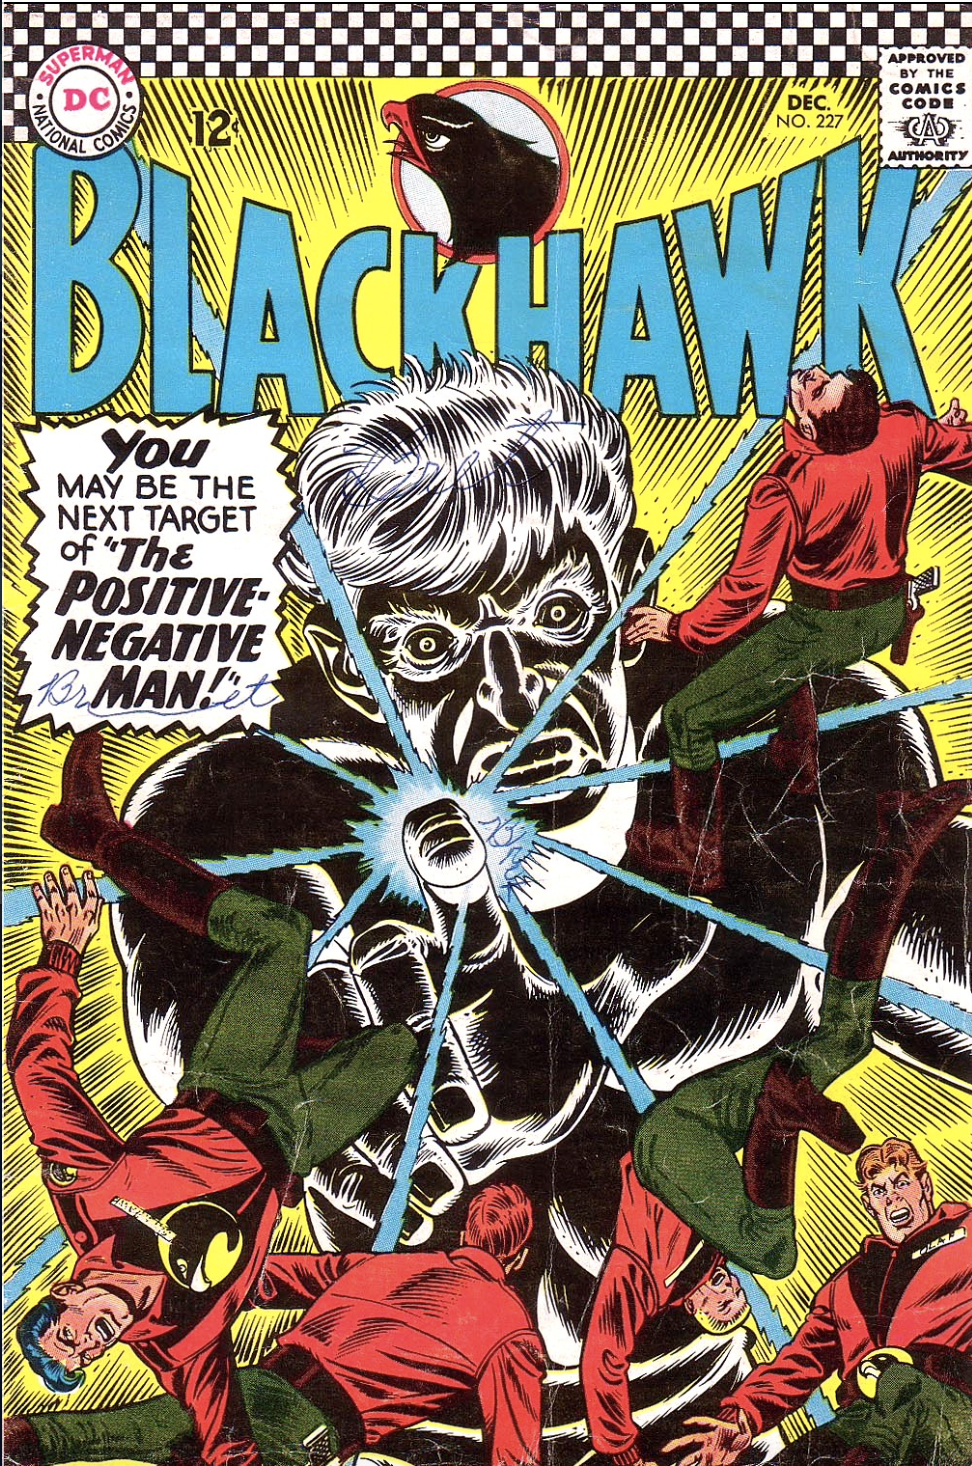 Don't Be So Negative (Blackhawk 227)